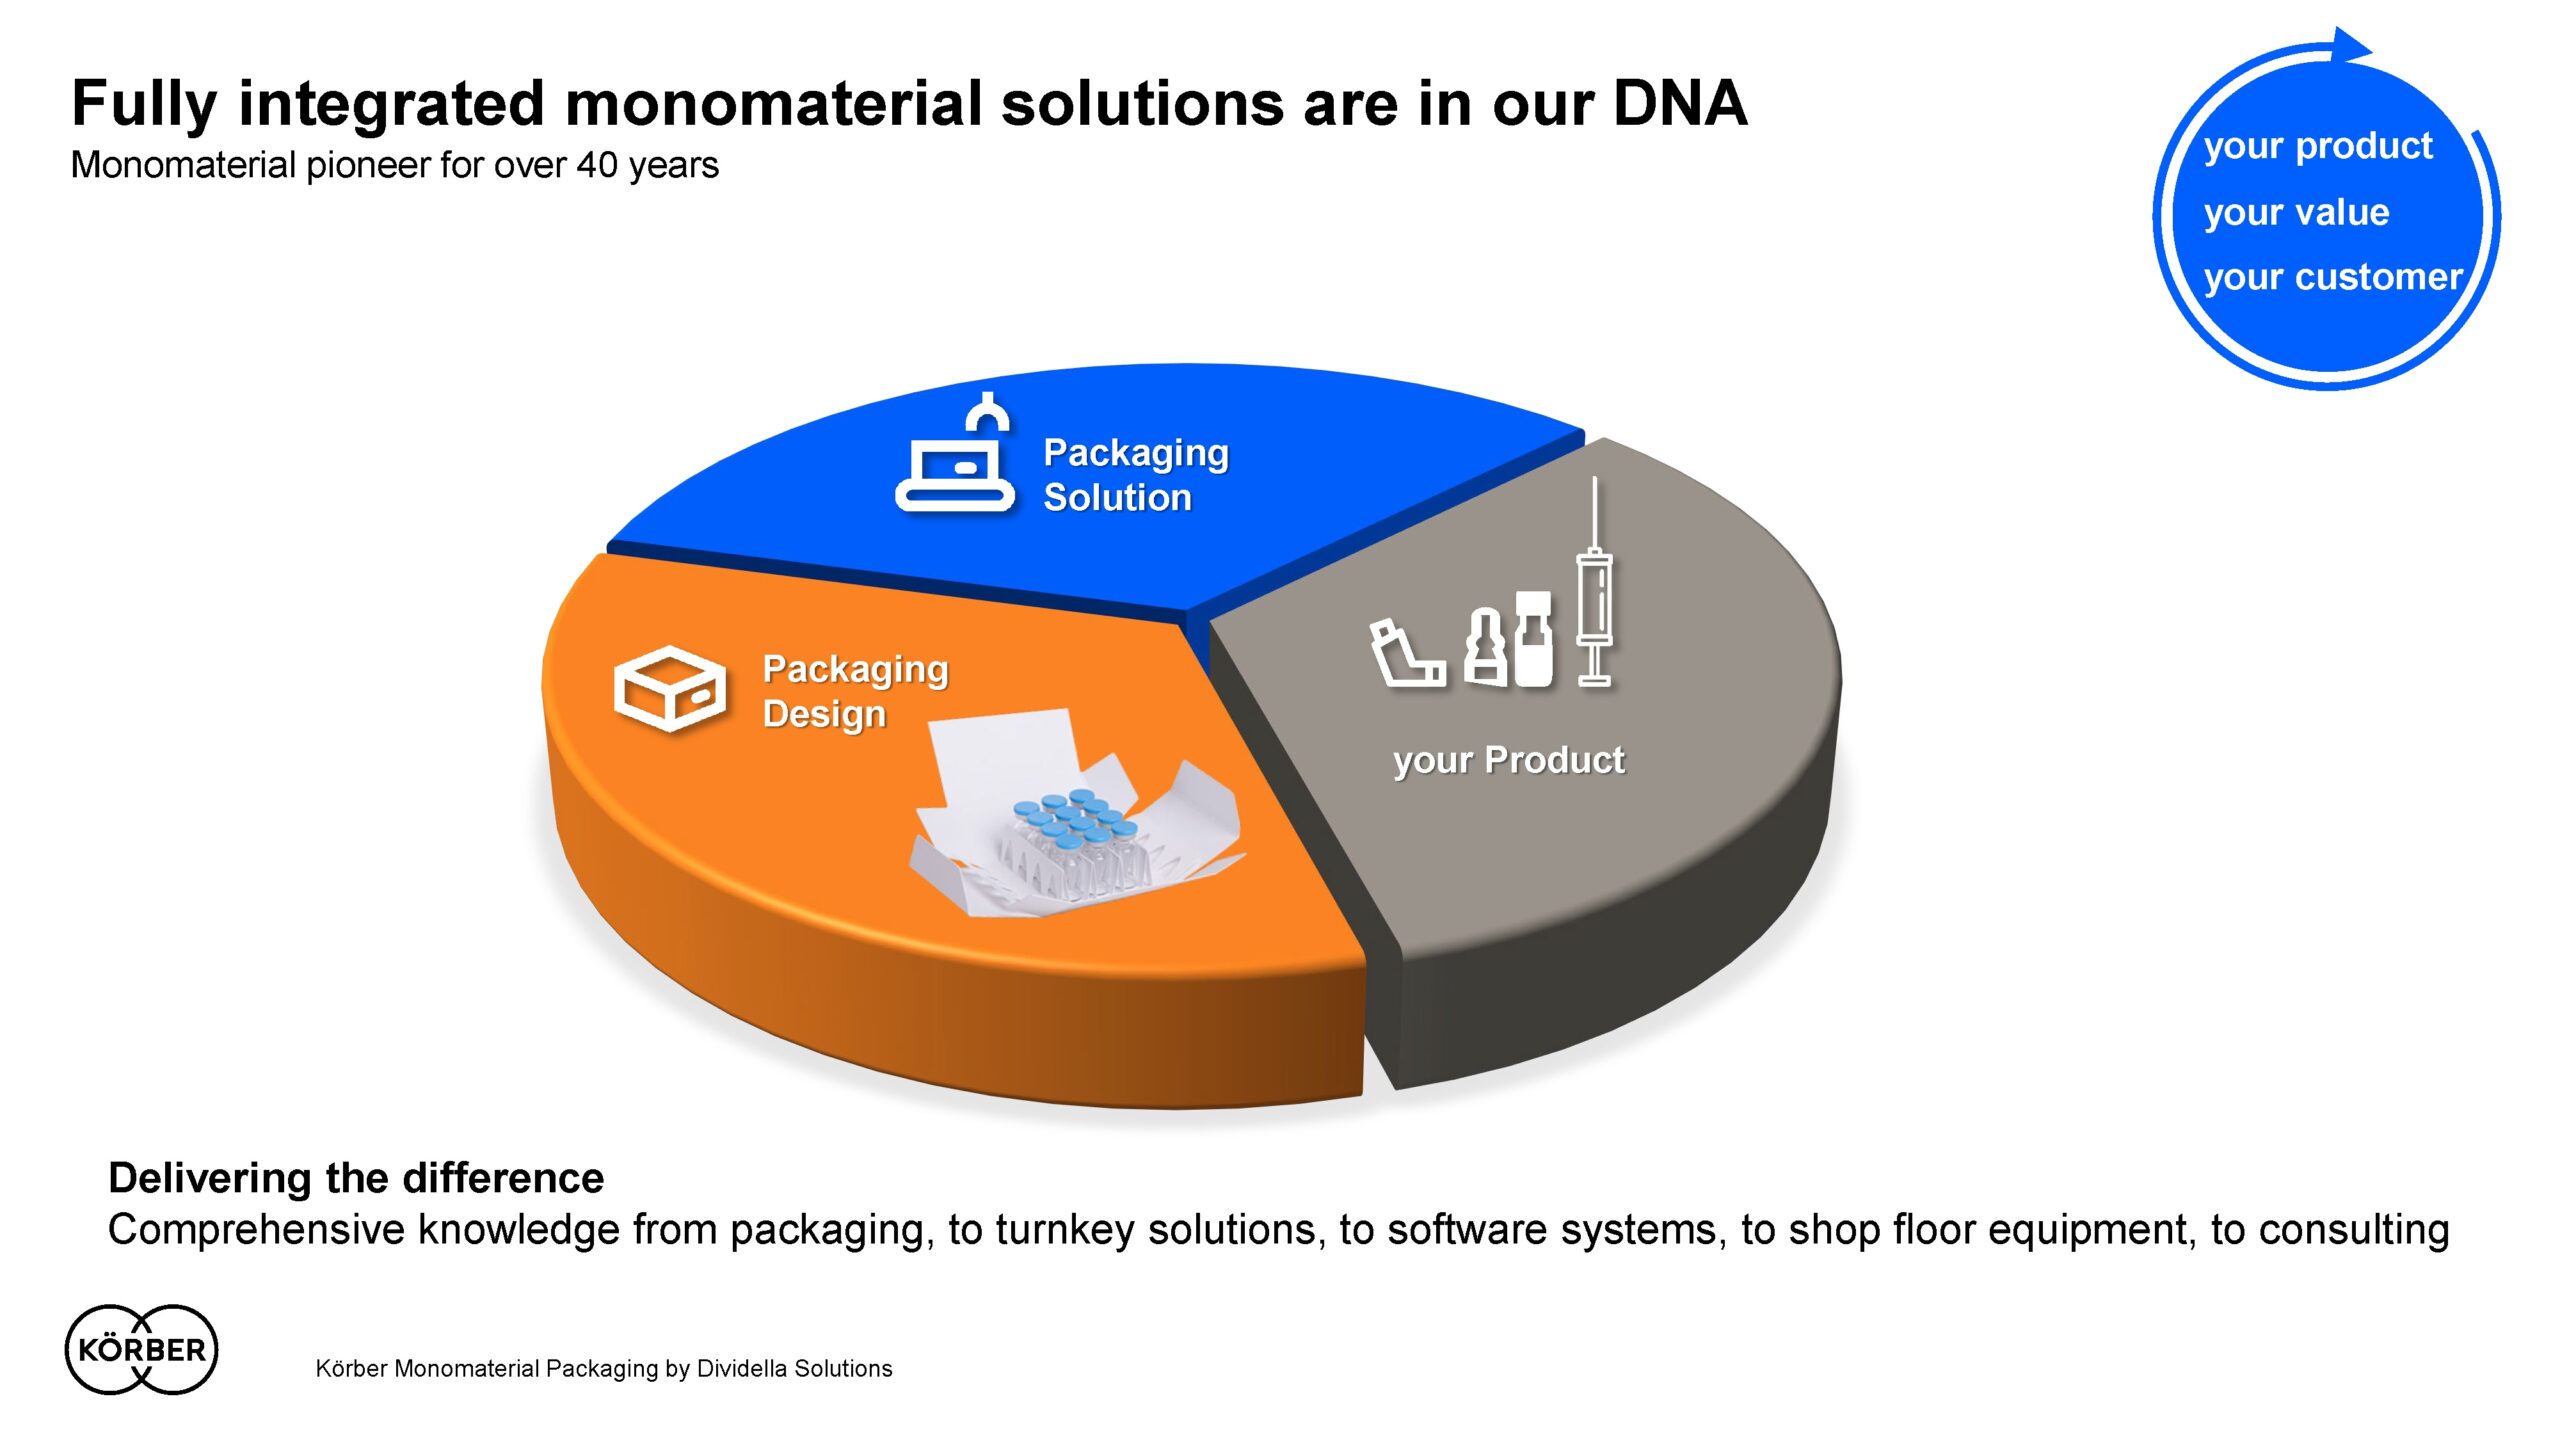 Körber monomaterial packaging solutions